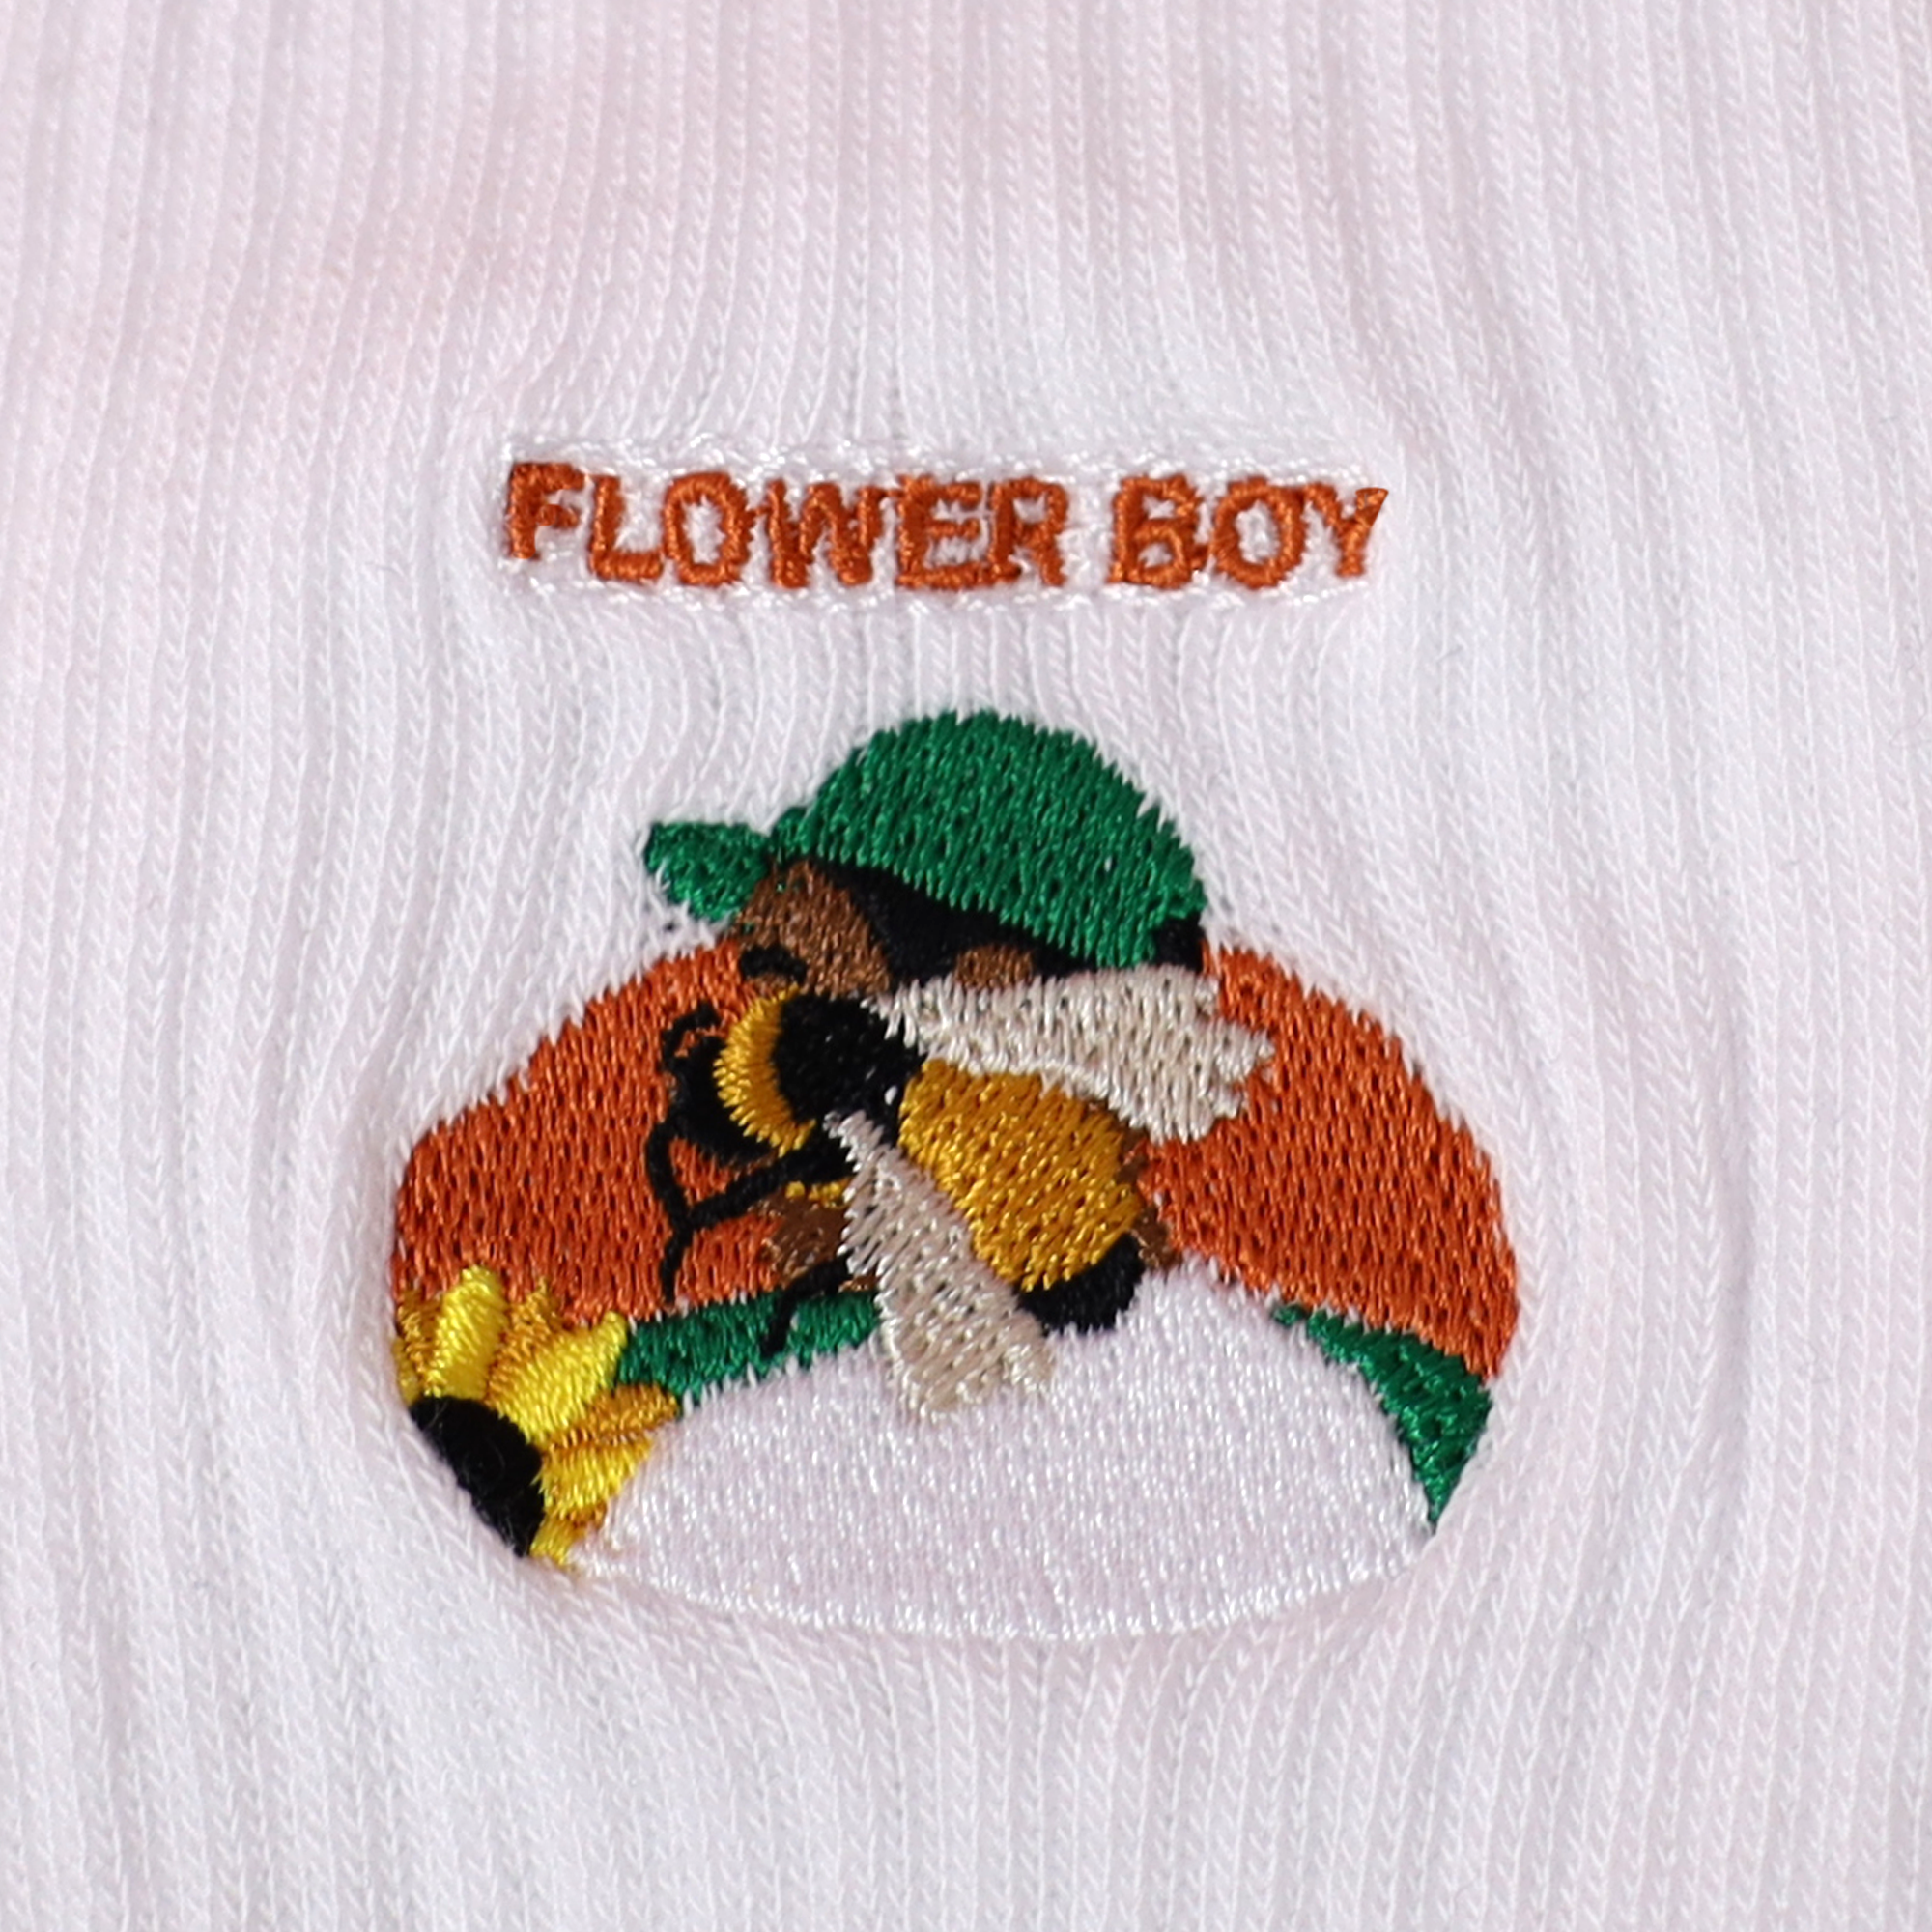 Flower Boy socks